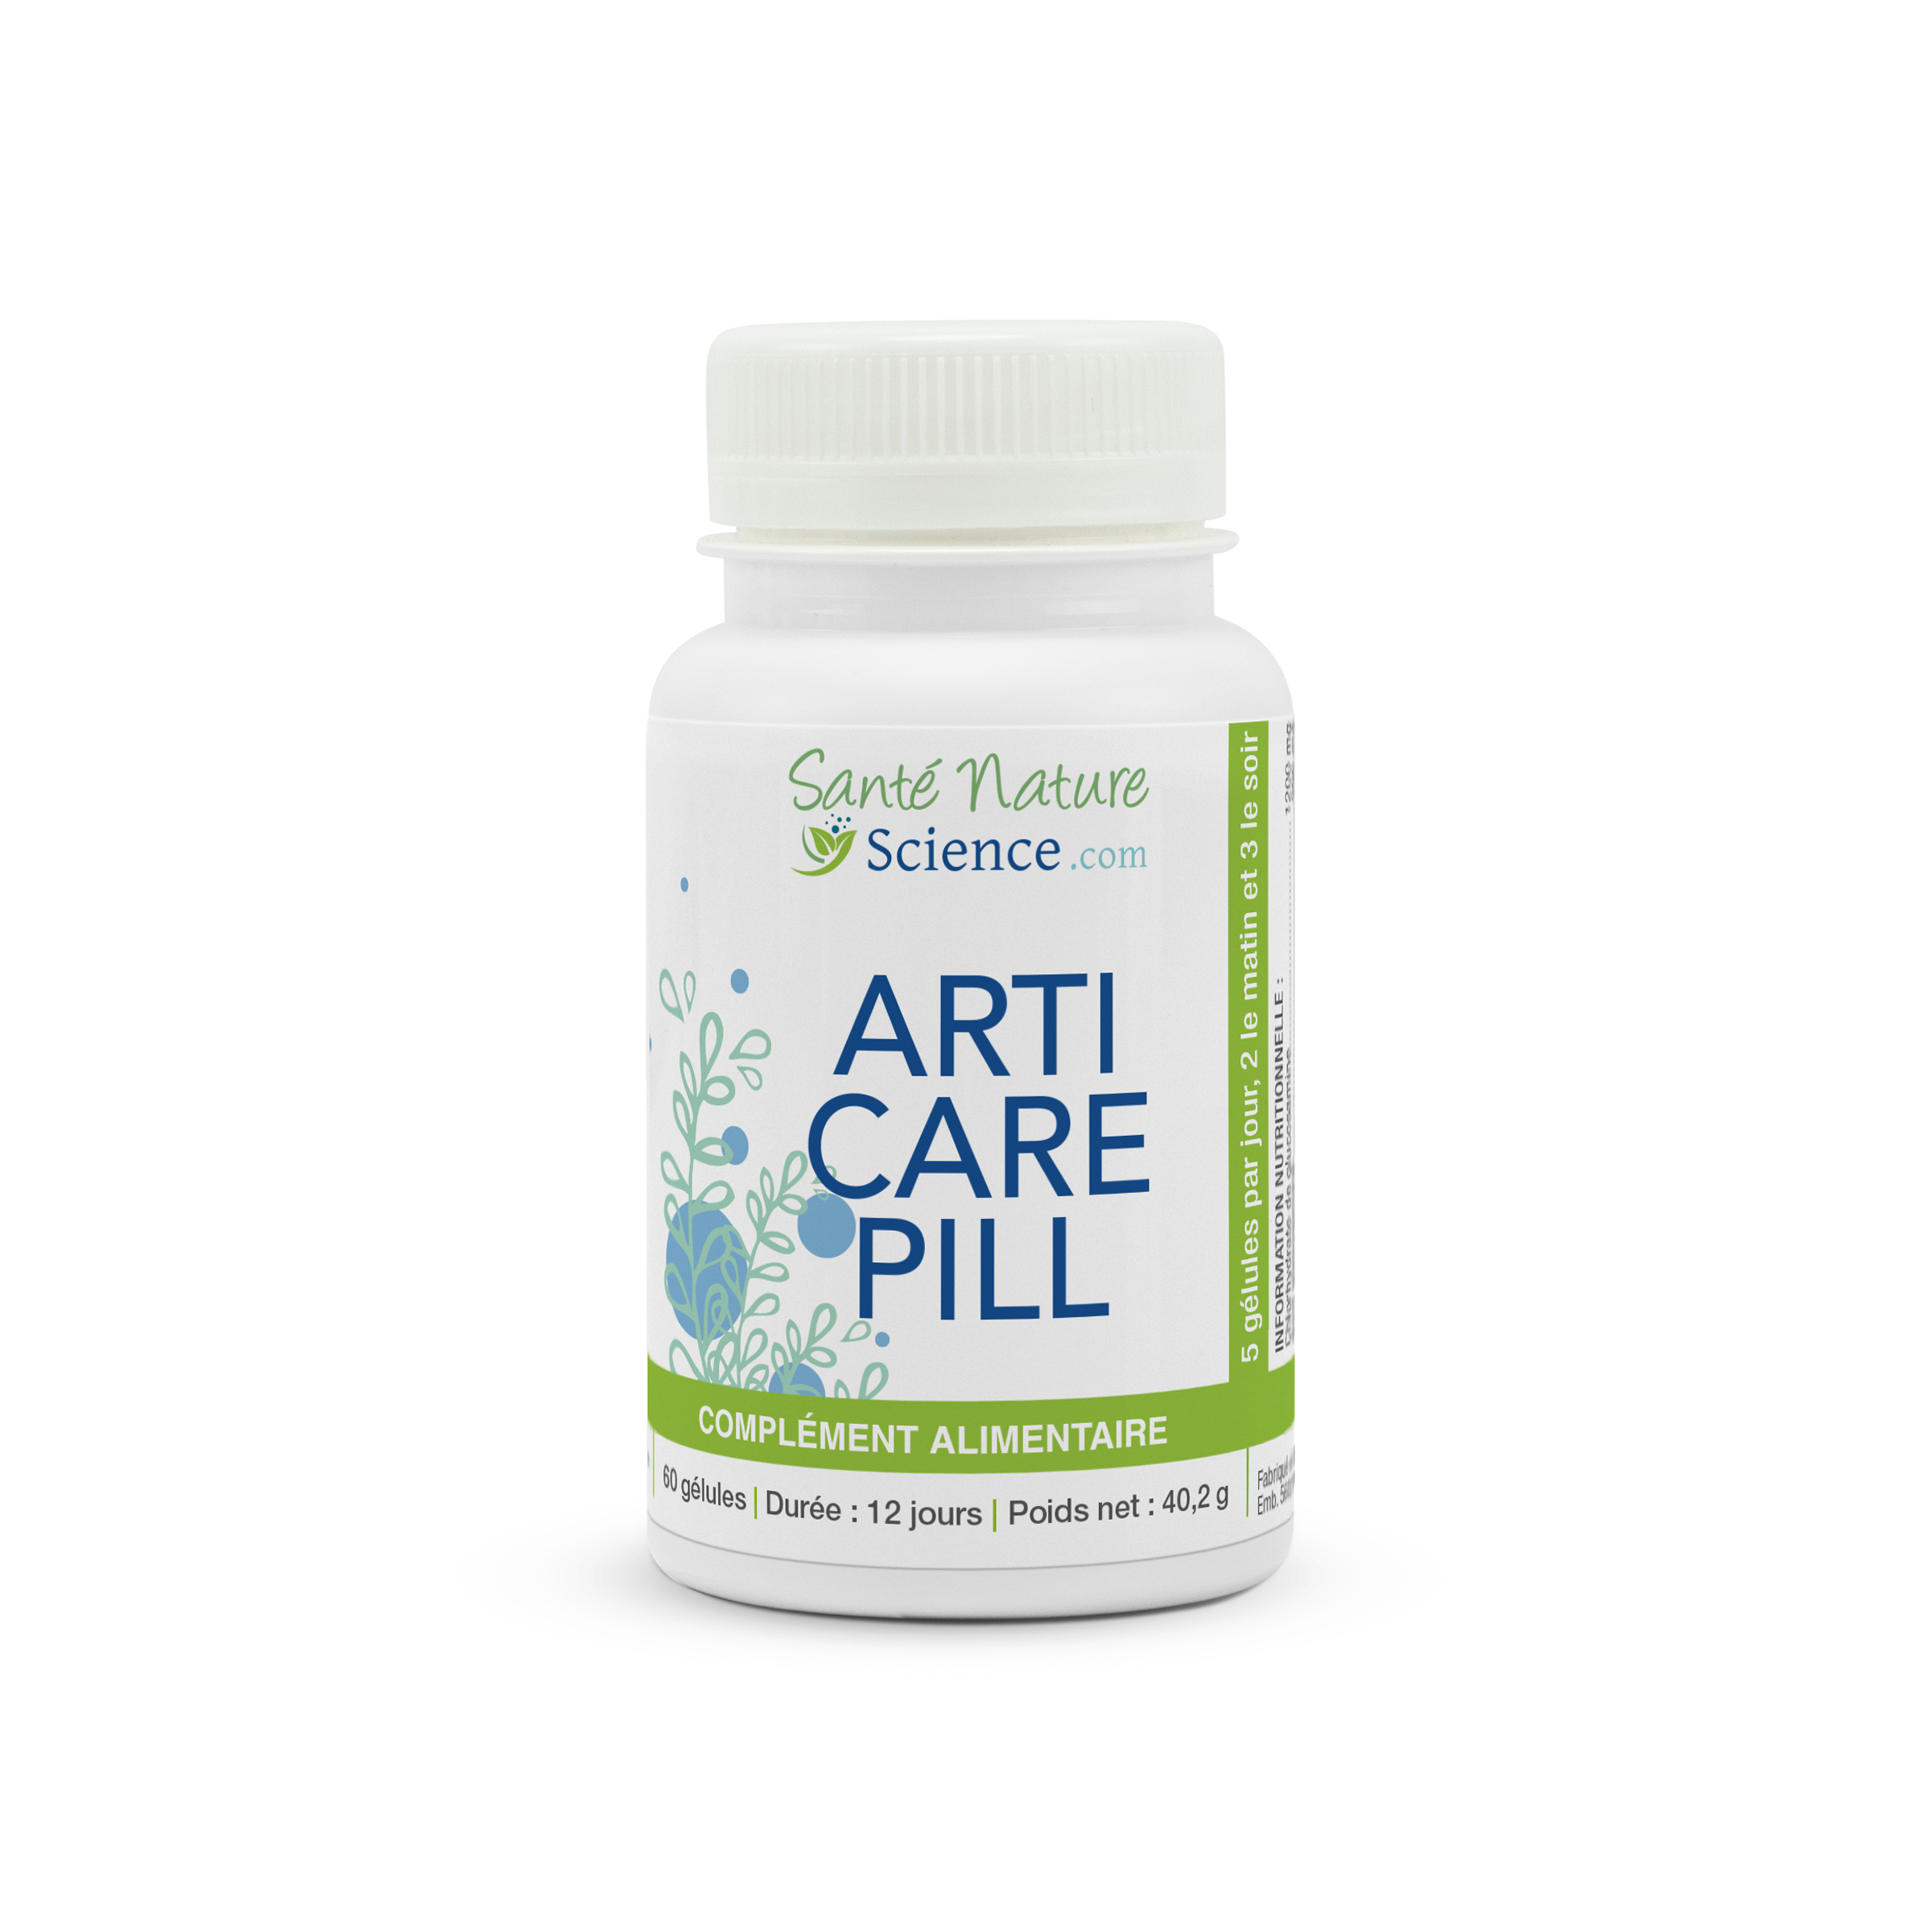 Arti-care-pill, complément alimentaire articulation douloureuses arthrose arthrite | Sante-nature-science.com